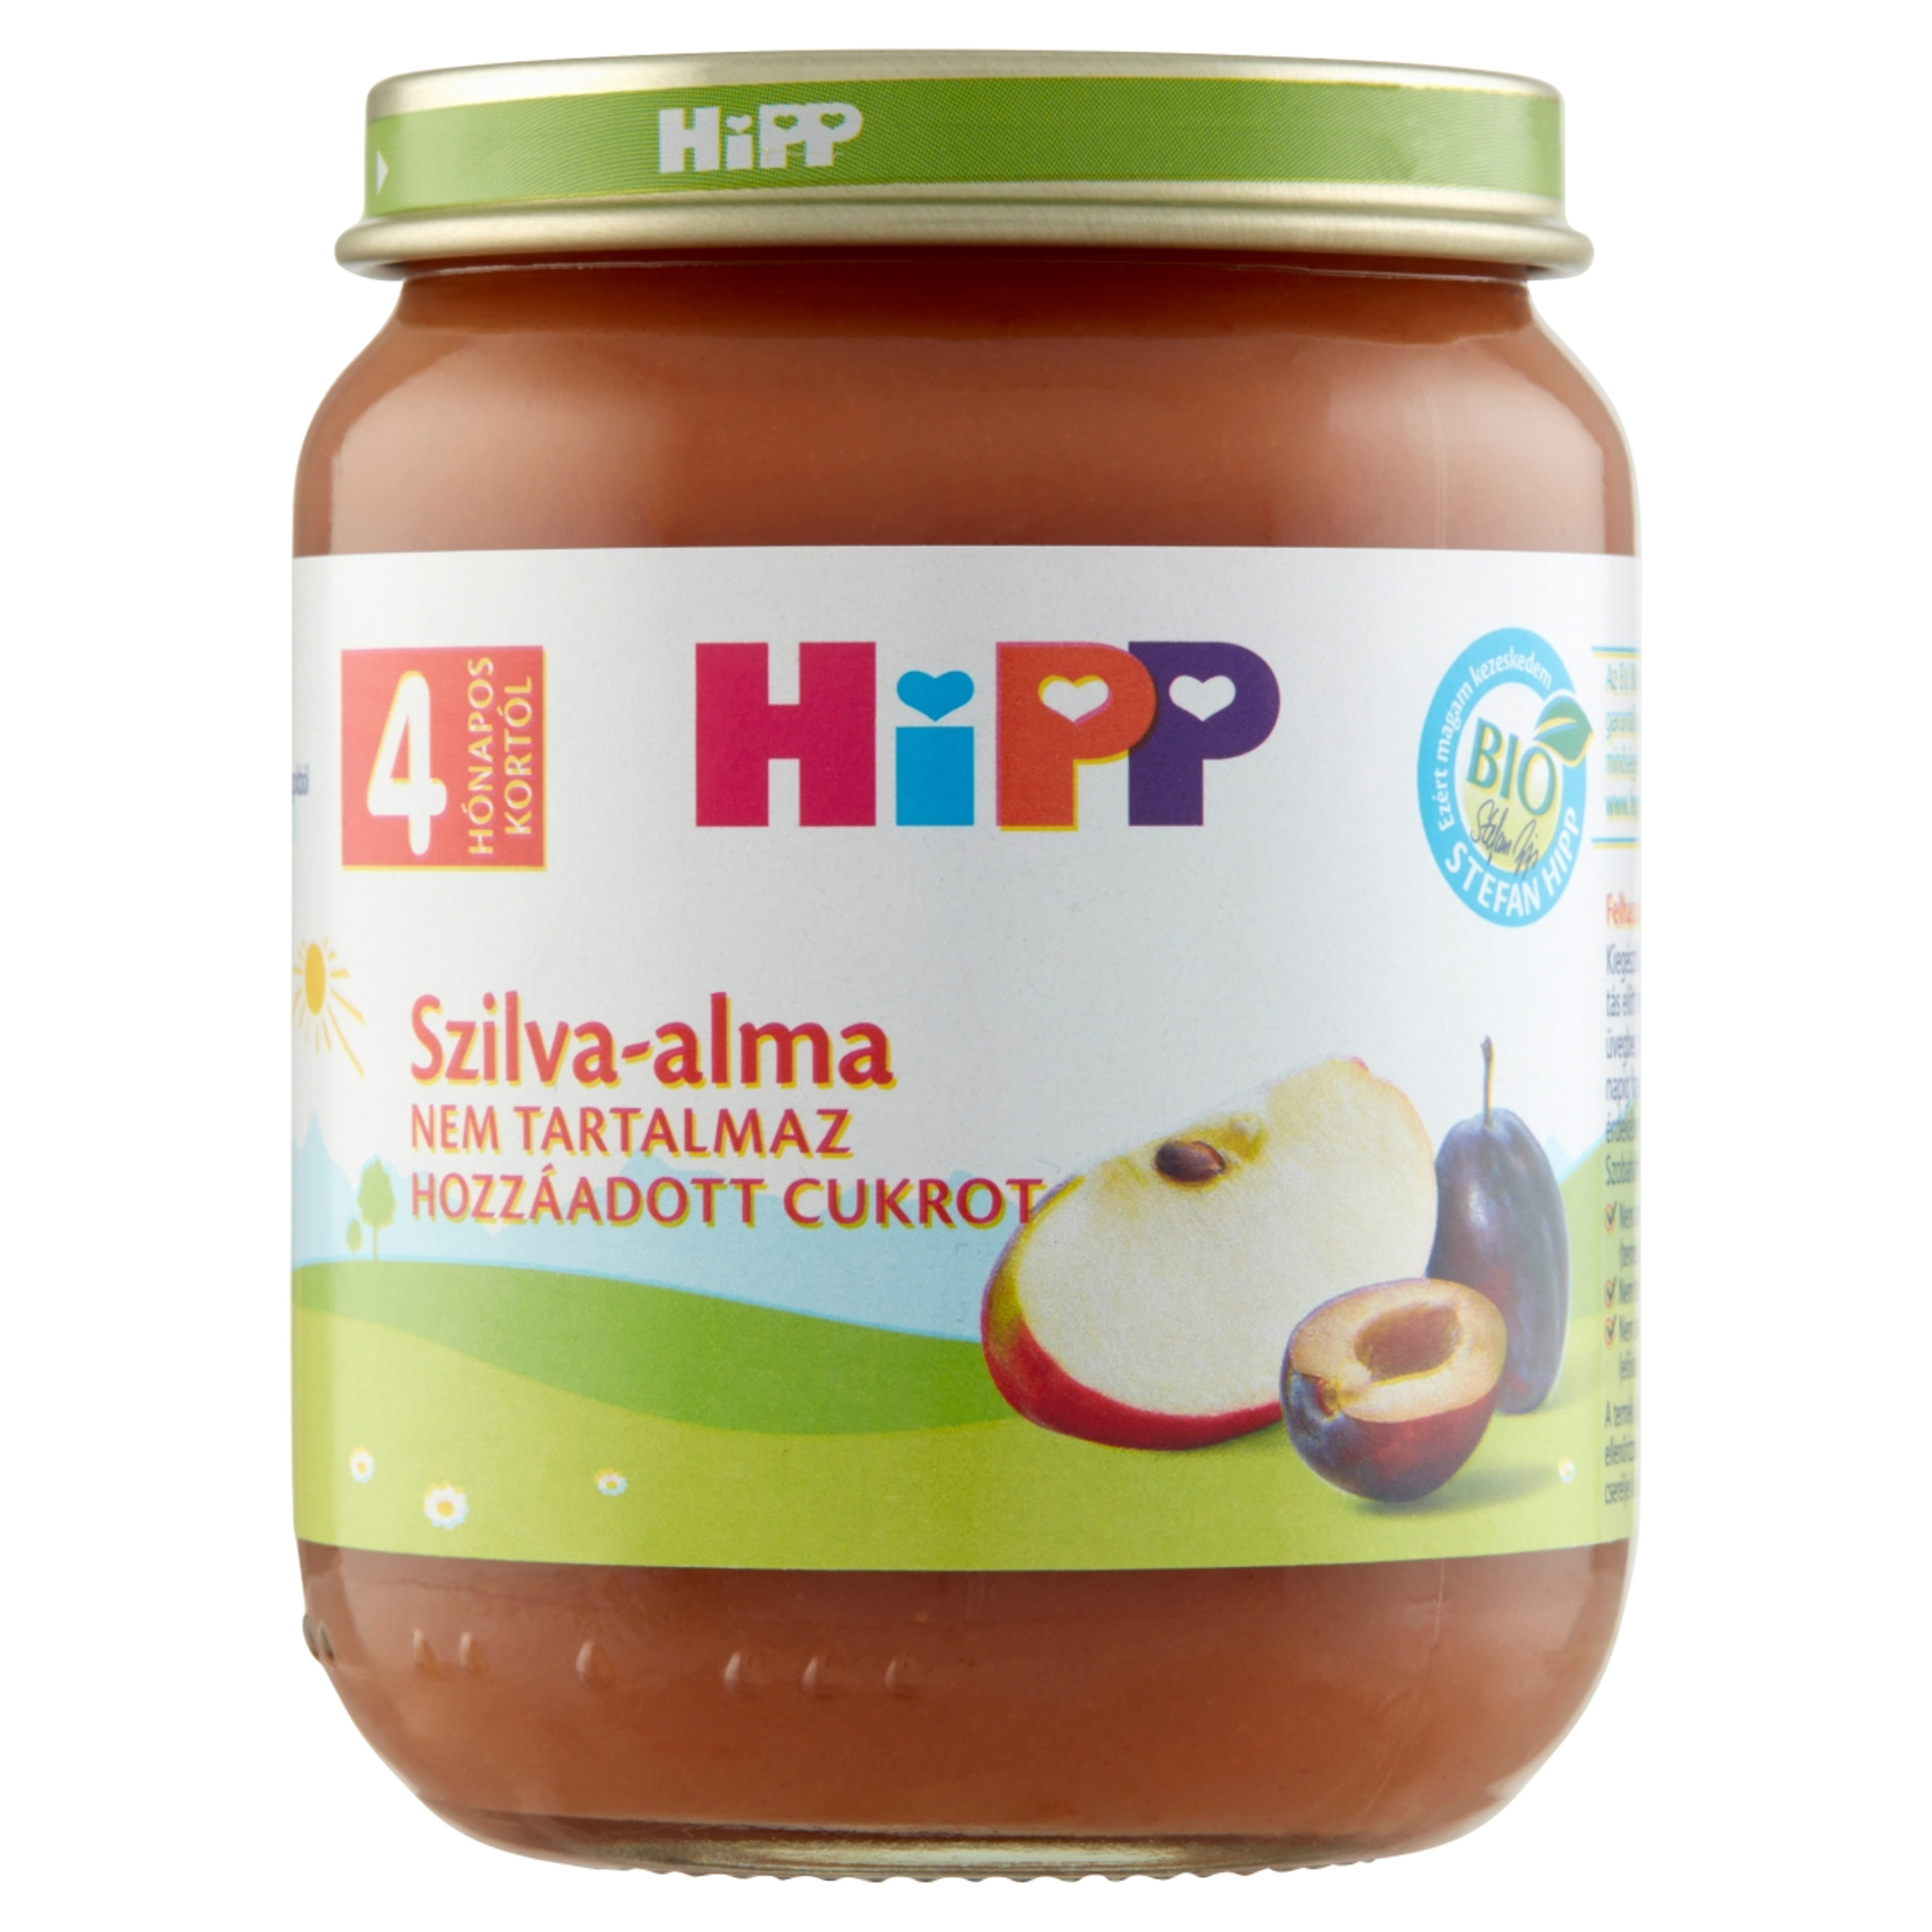 Hipp bio alma-szilva 4 hónapos kortól - 125 g